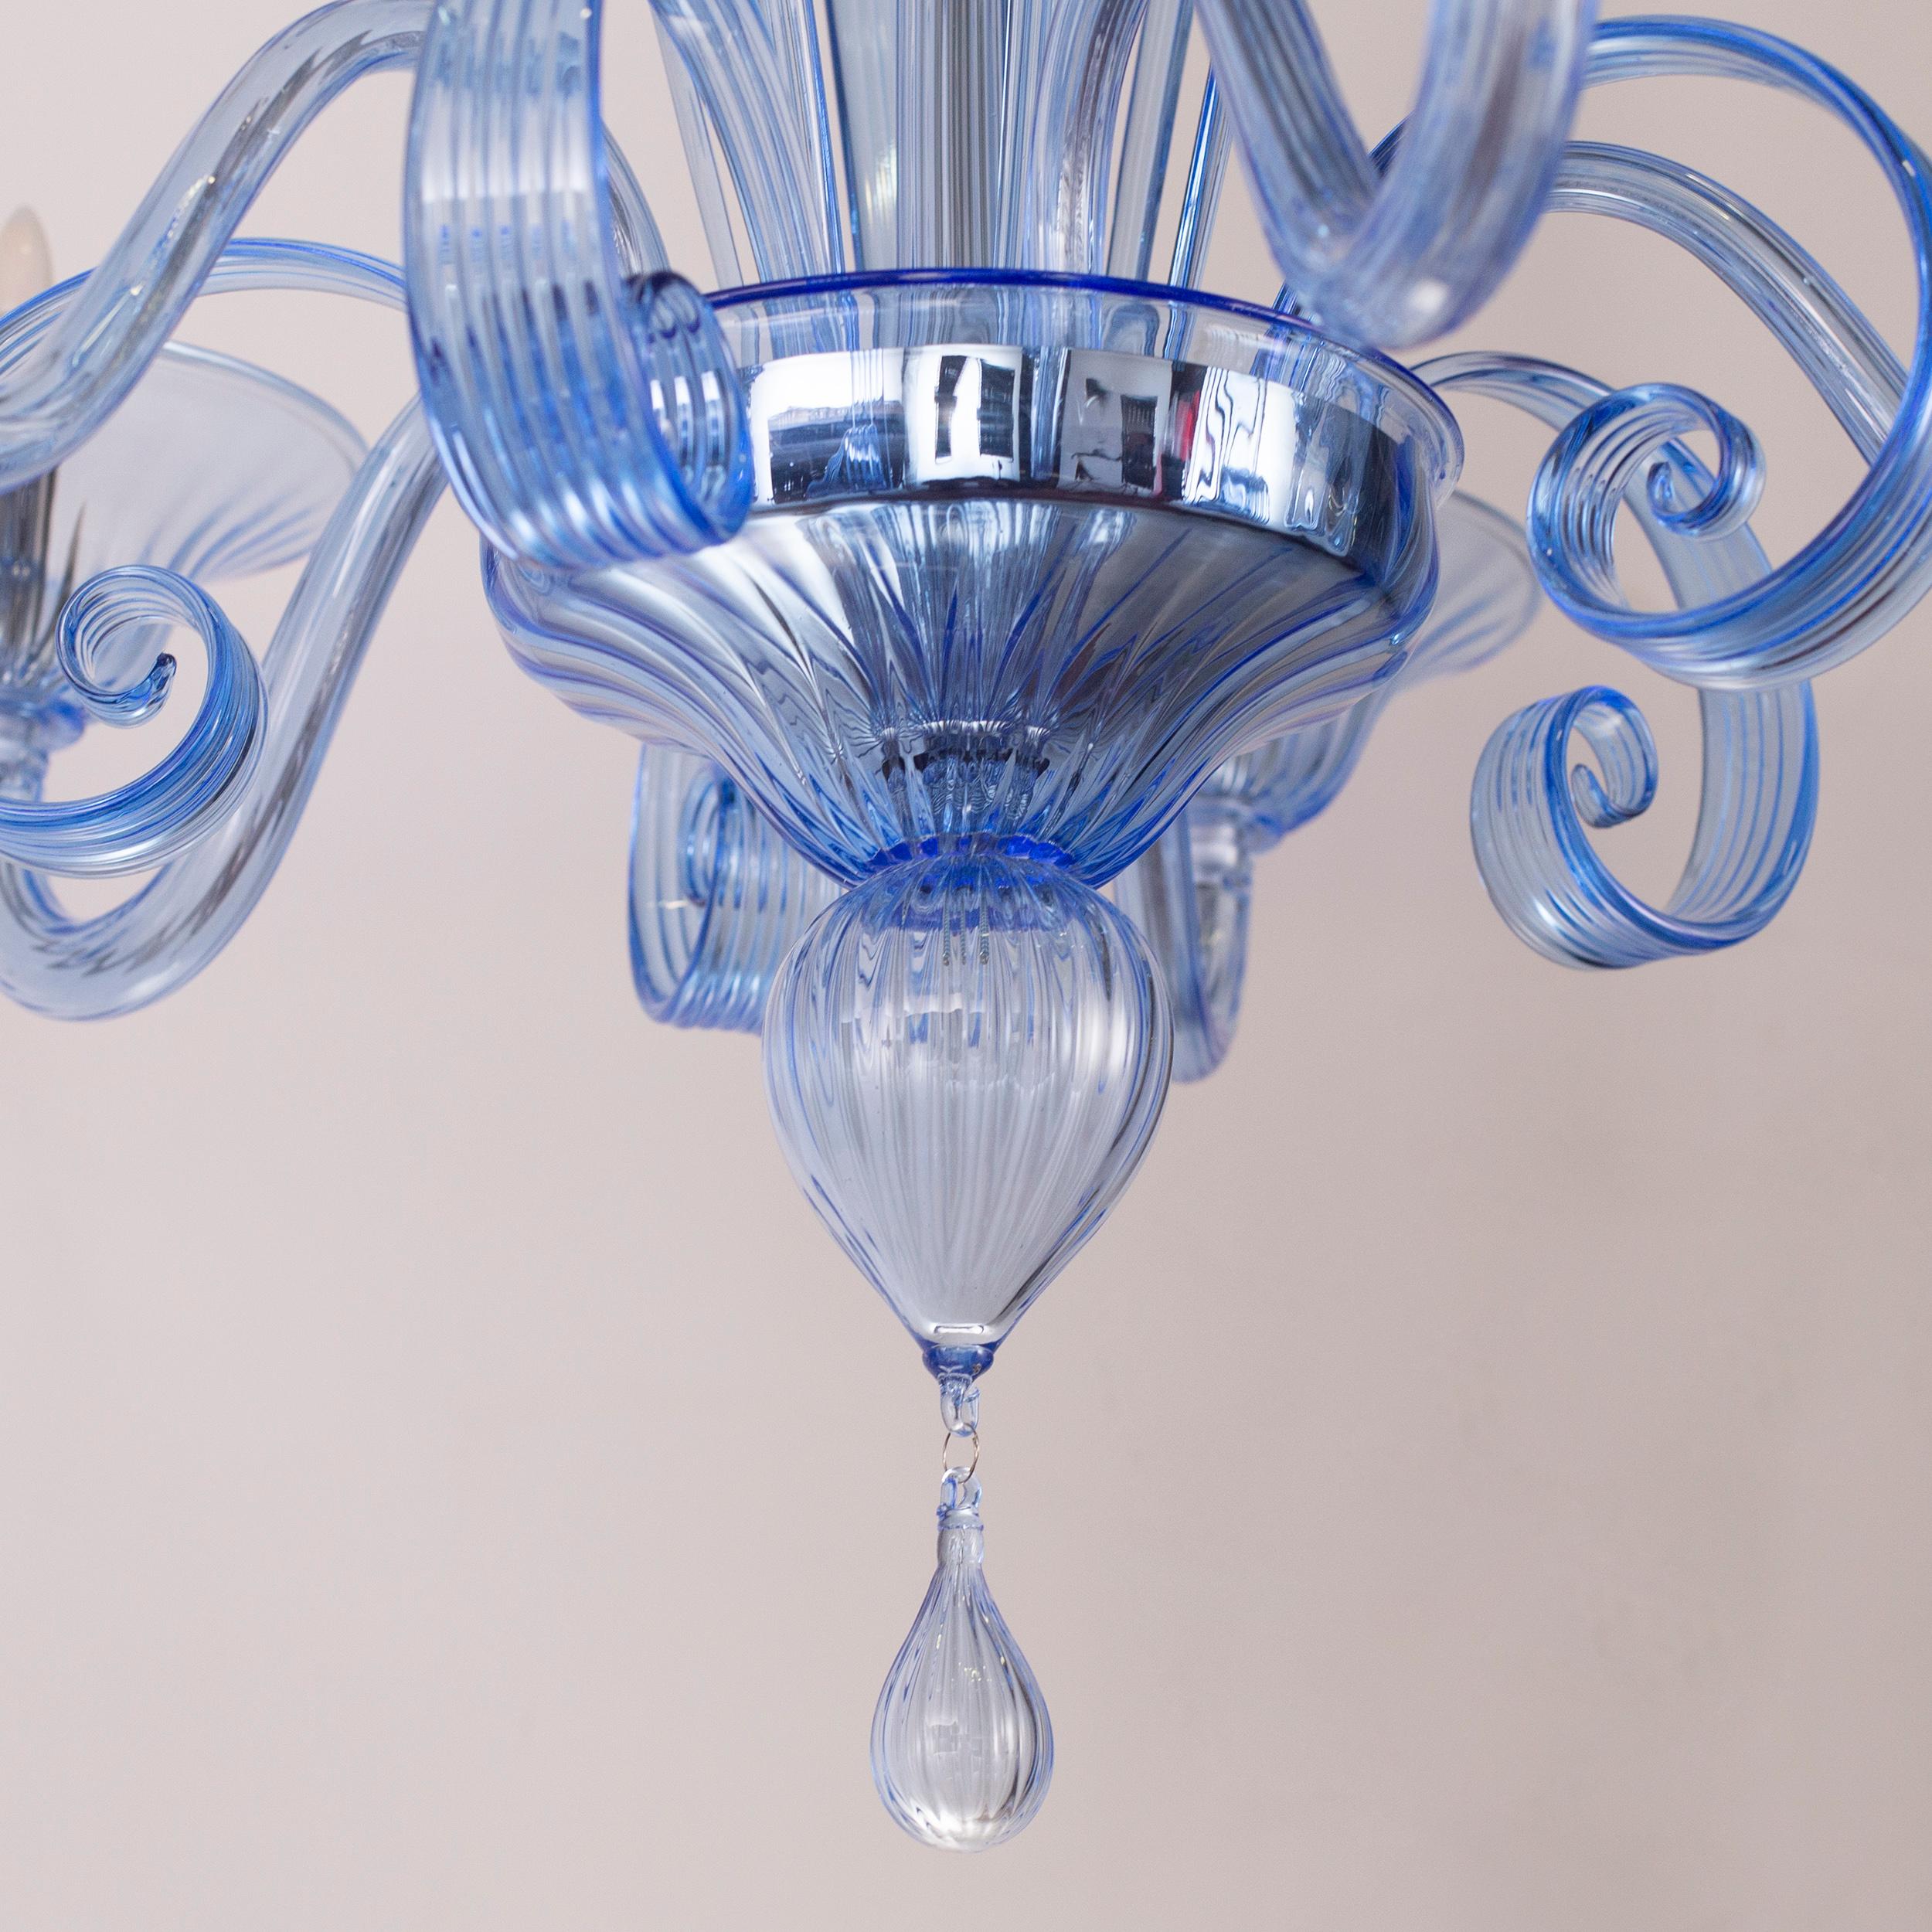 Italian Capriccio Chandelier 5 Arms Blue Artistic Murano Glass by Multiforme For Sale